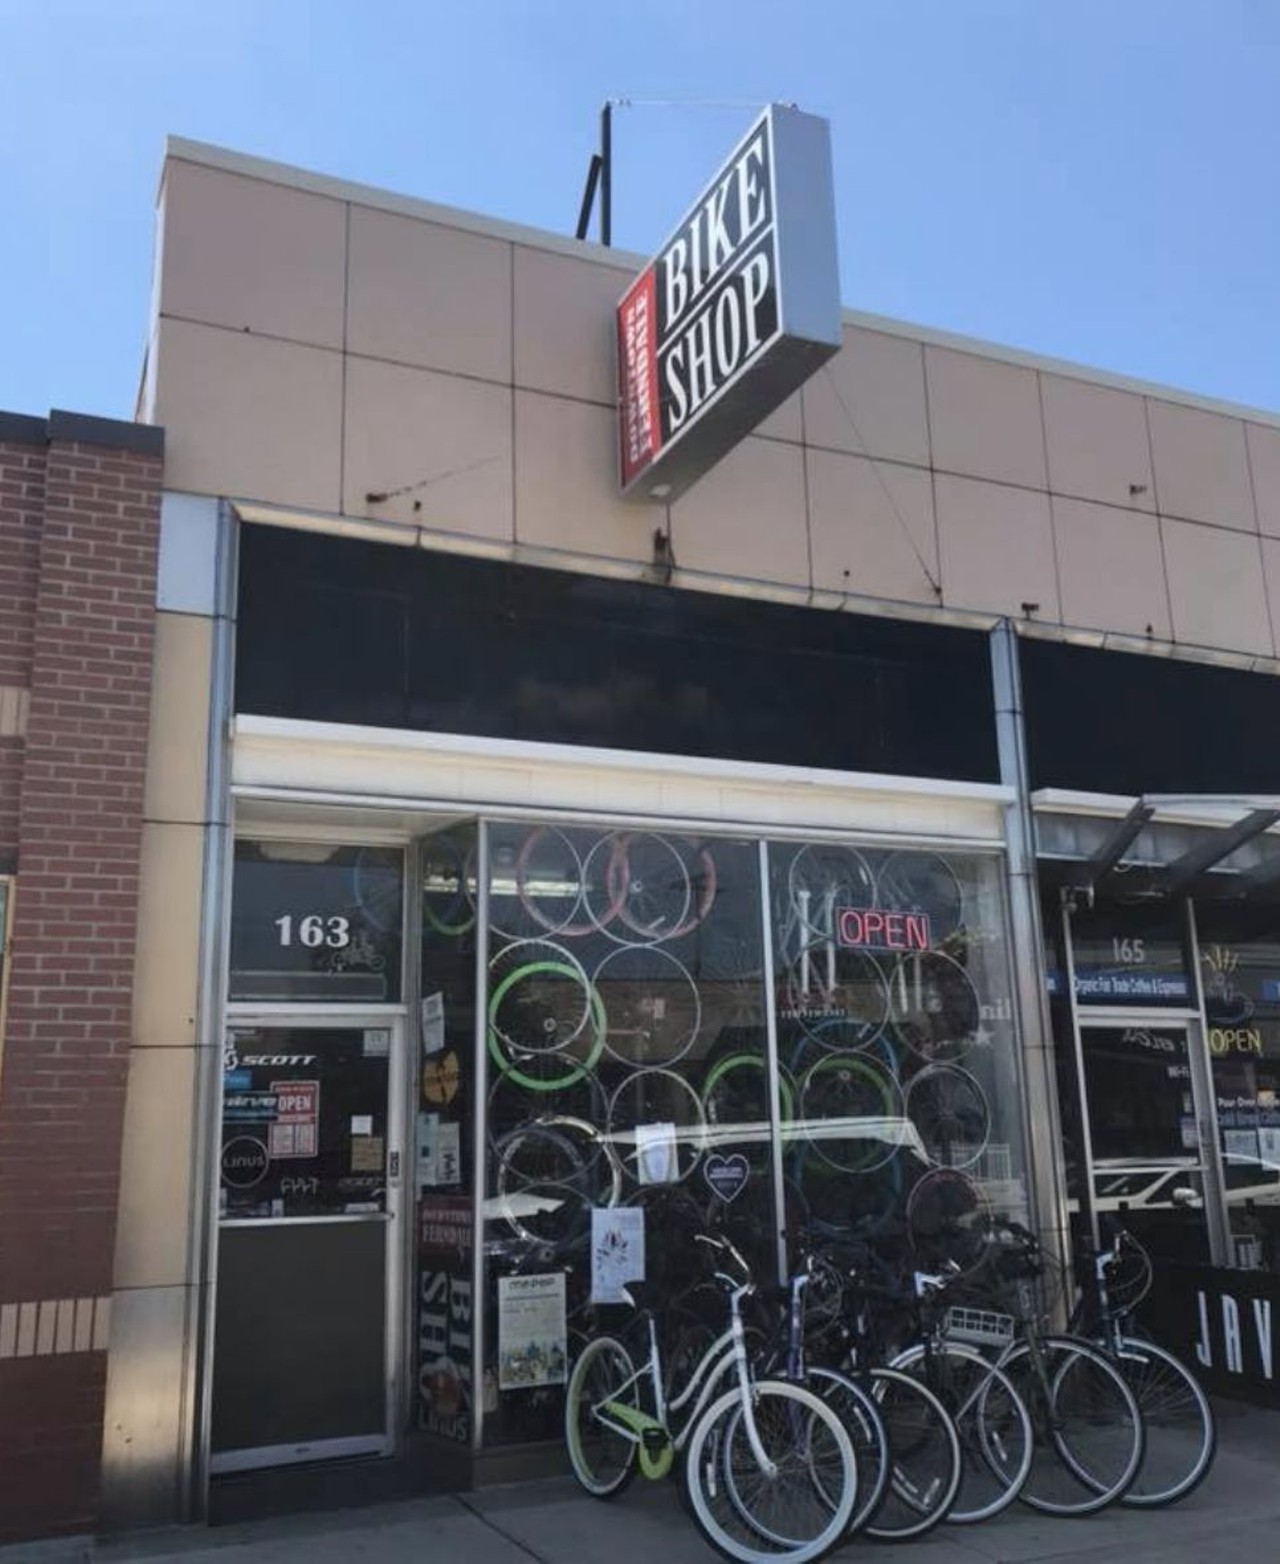 Best Bicycle Shop: Downtown Ferndale Bike Shop
163 W. Nine Mile Rd., Ferndale; 248-439-1892; downtown-bikeshop.com